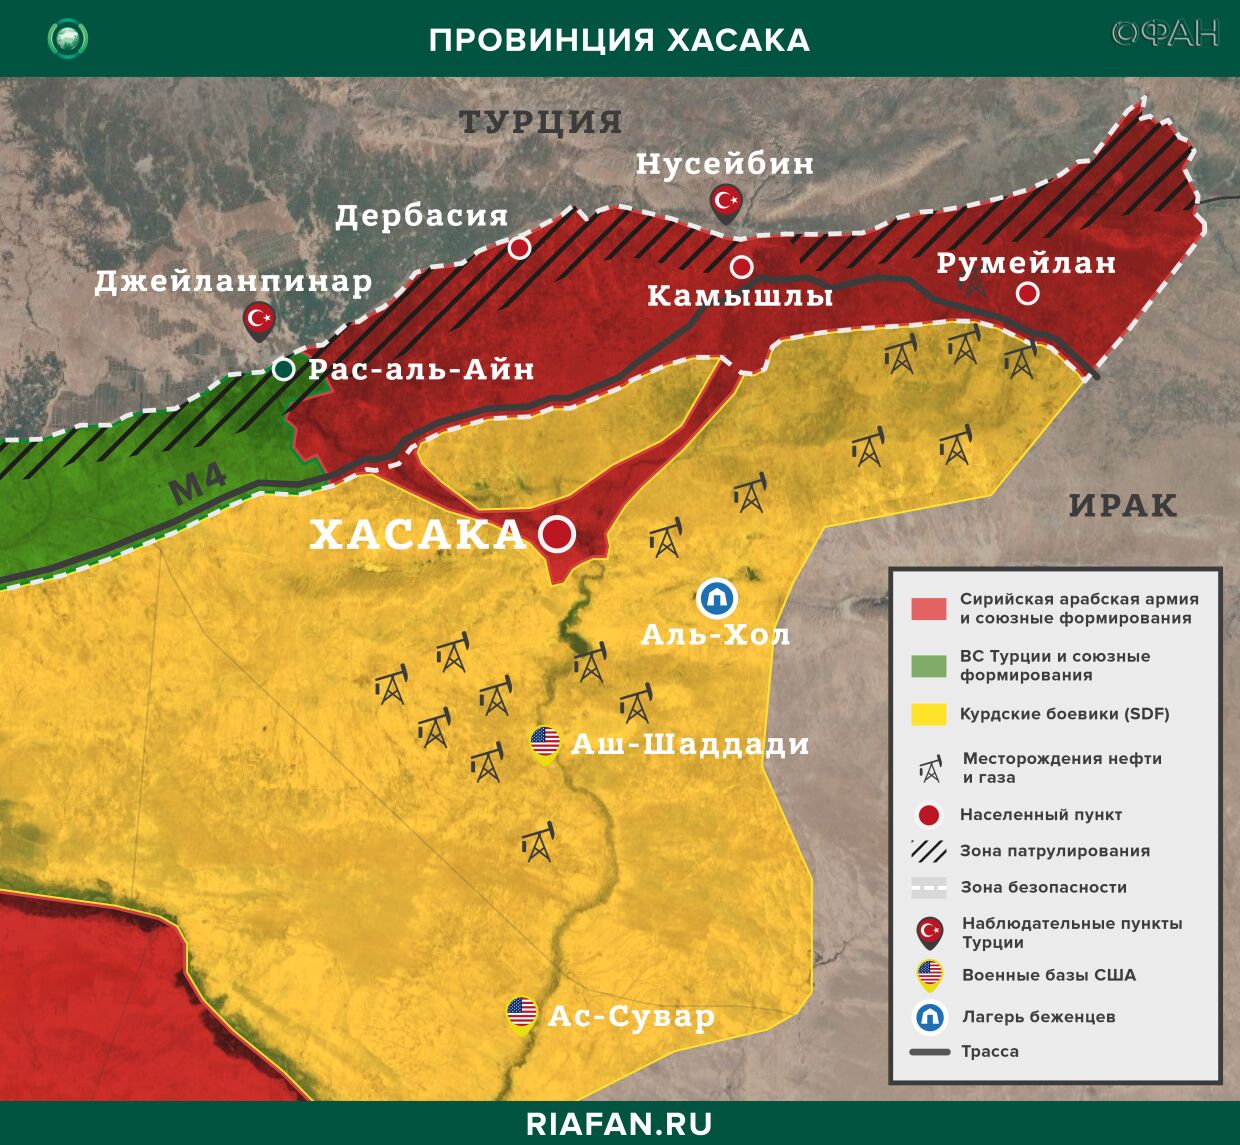 Resultados diarios de Siria para 5 Septiembre 06.00: Турцию подозревают в подготовке наступления в САР